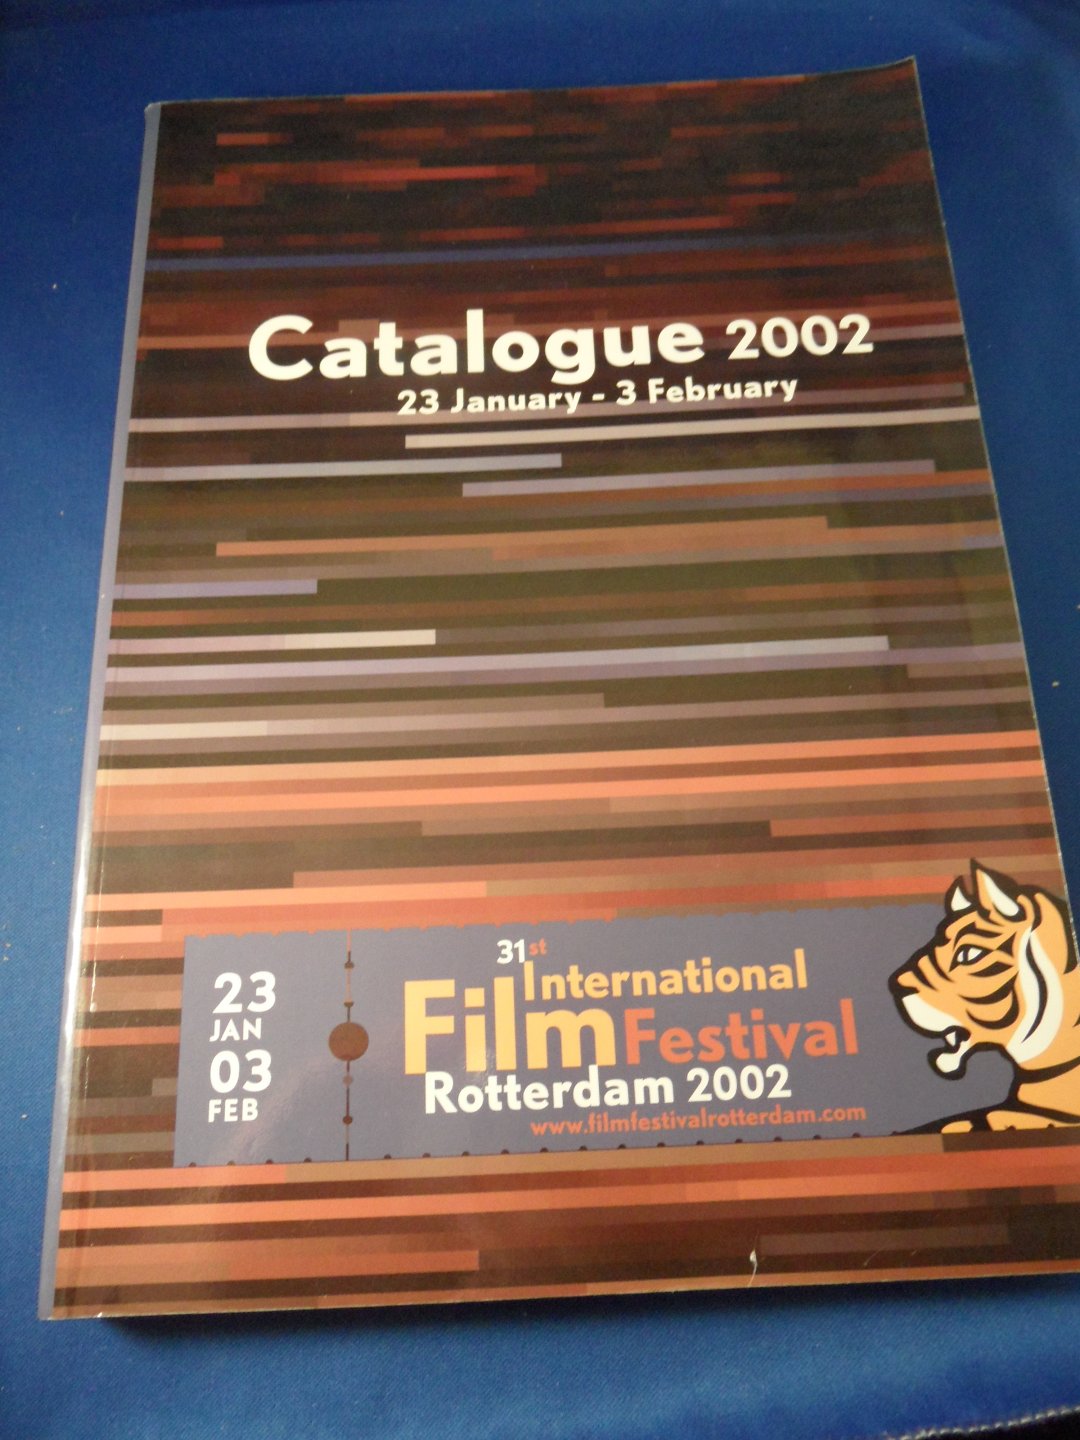  - Catalogue 2002. 23 January - 3 February. 31st Filmfestival Rotterdam 2002